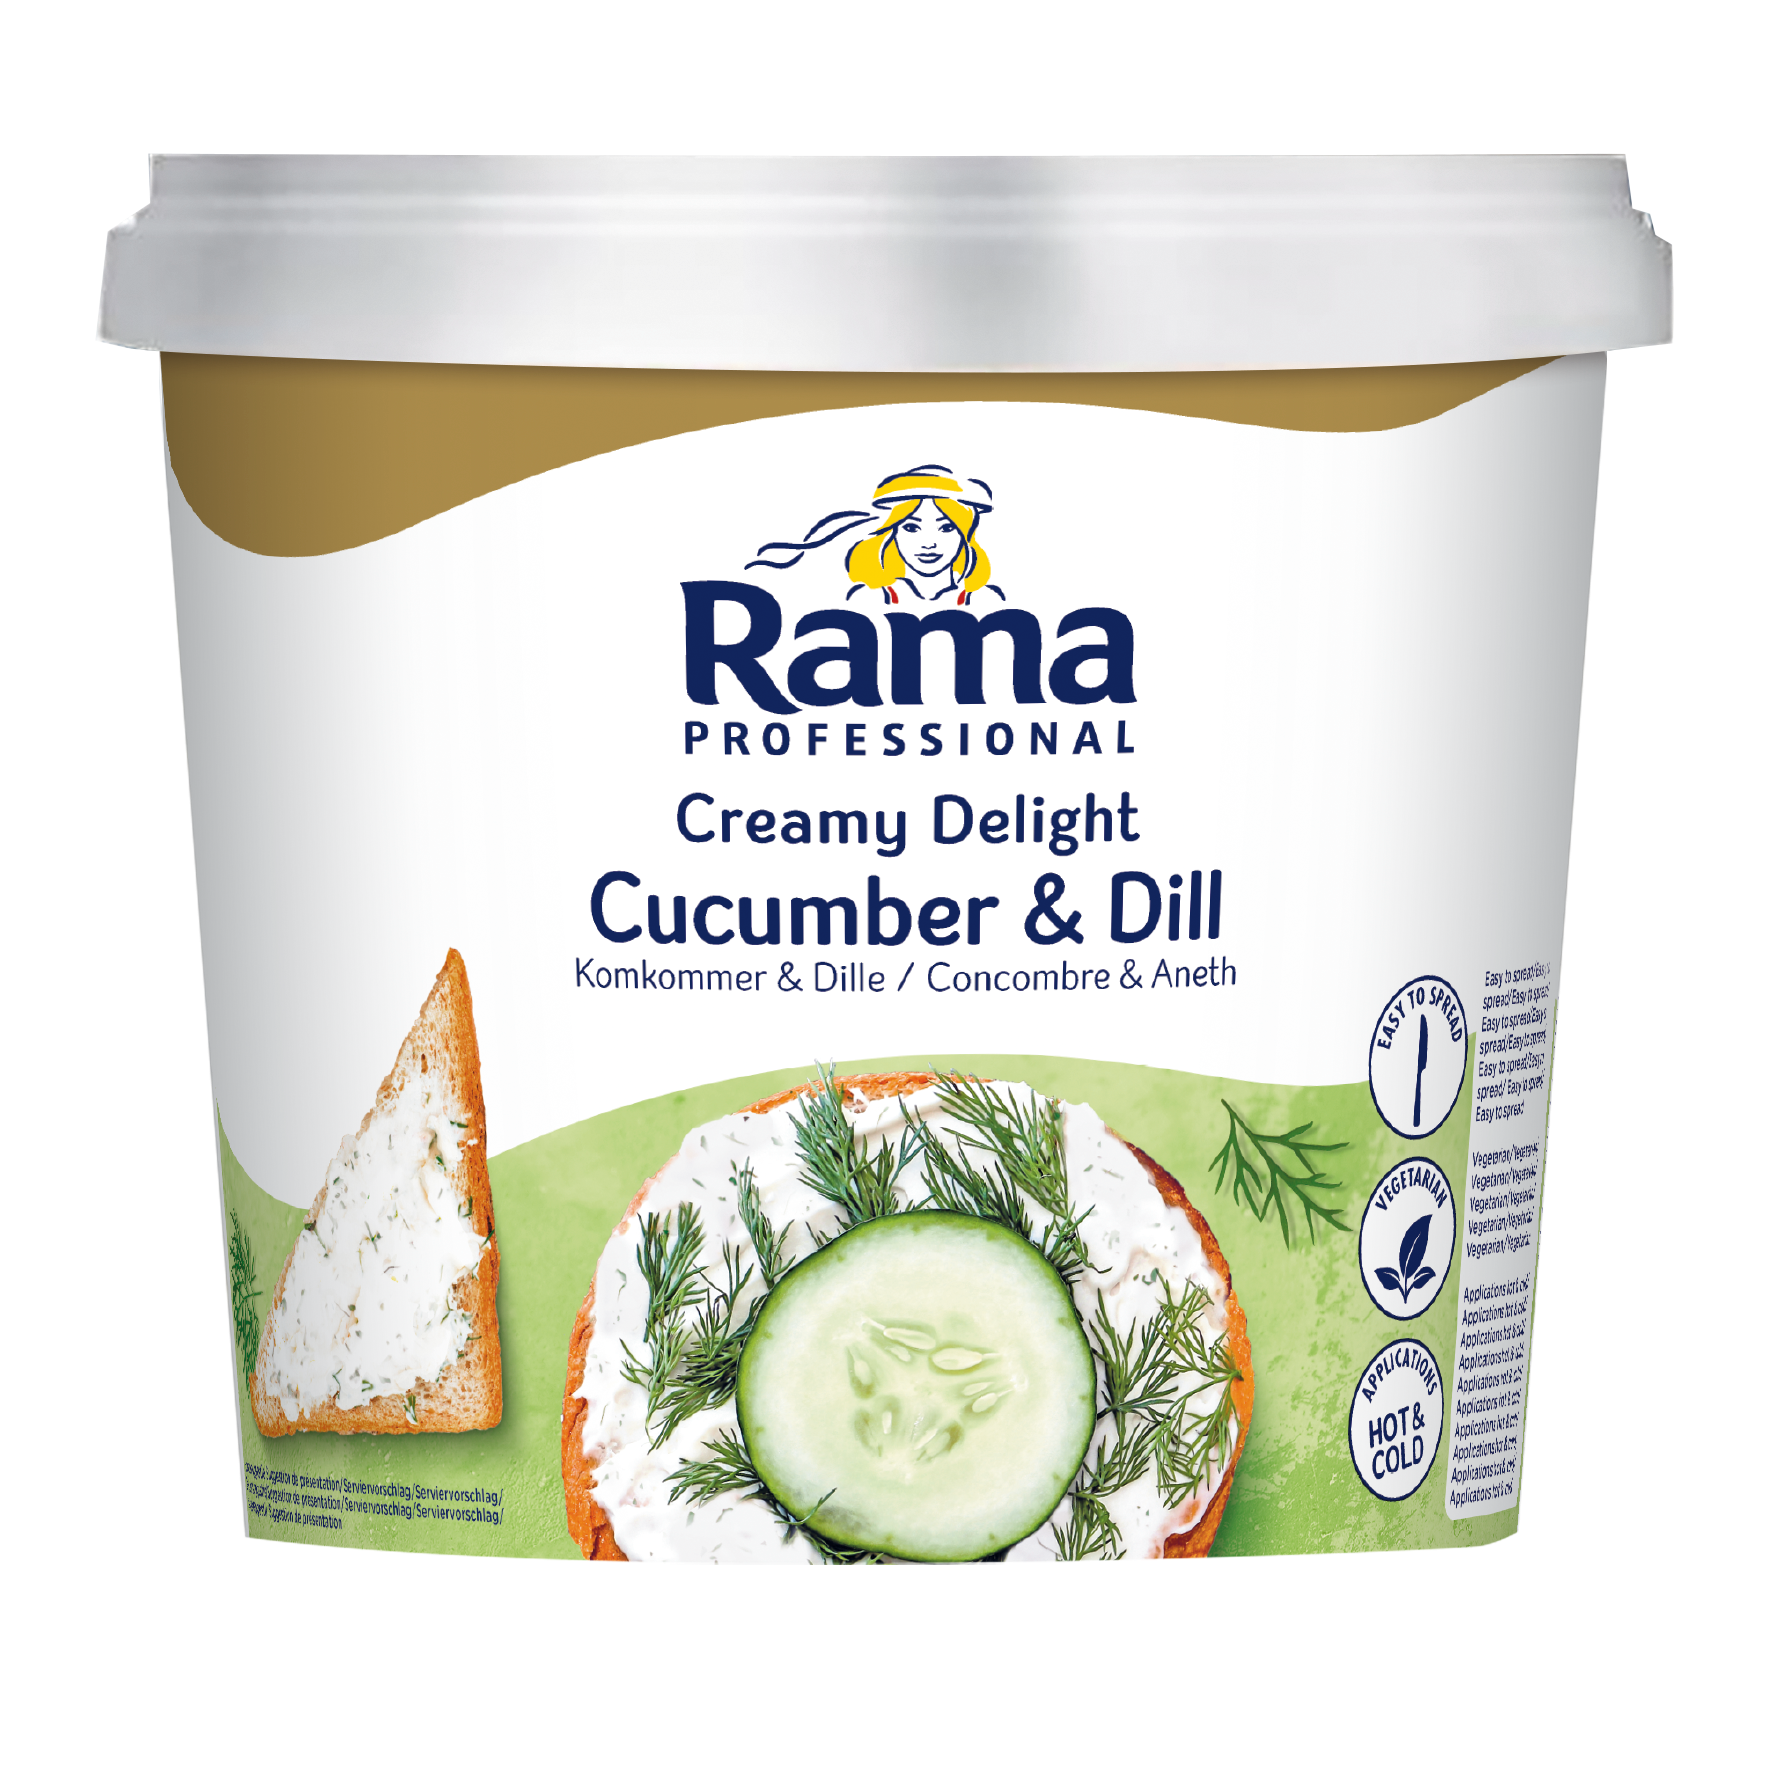 Rama Professional Creamy Delight Cucumber & Dill 1.5kg